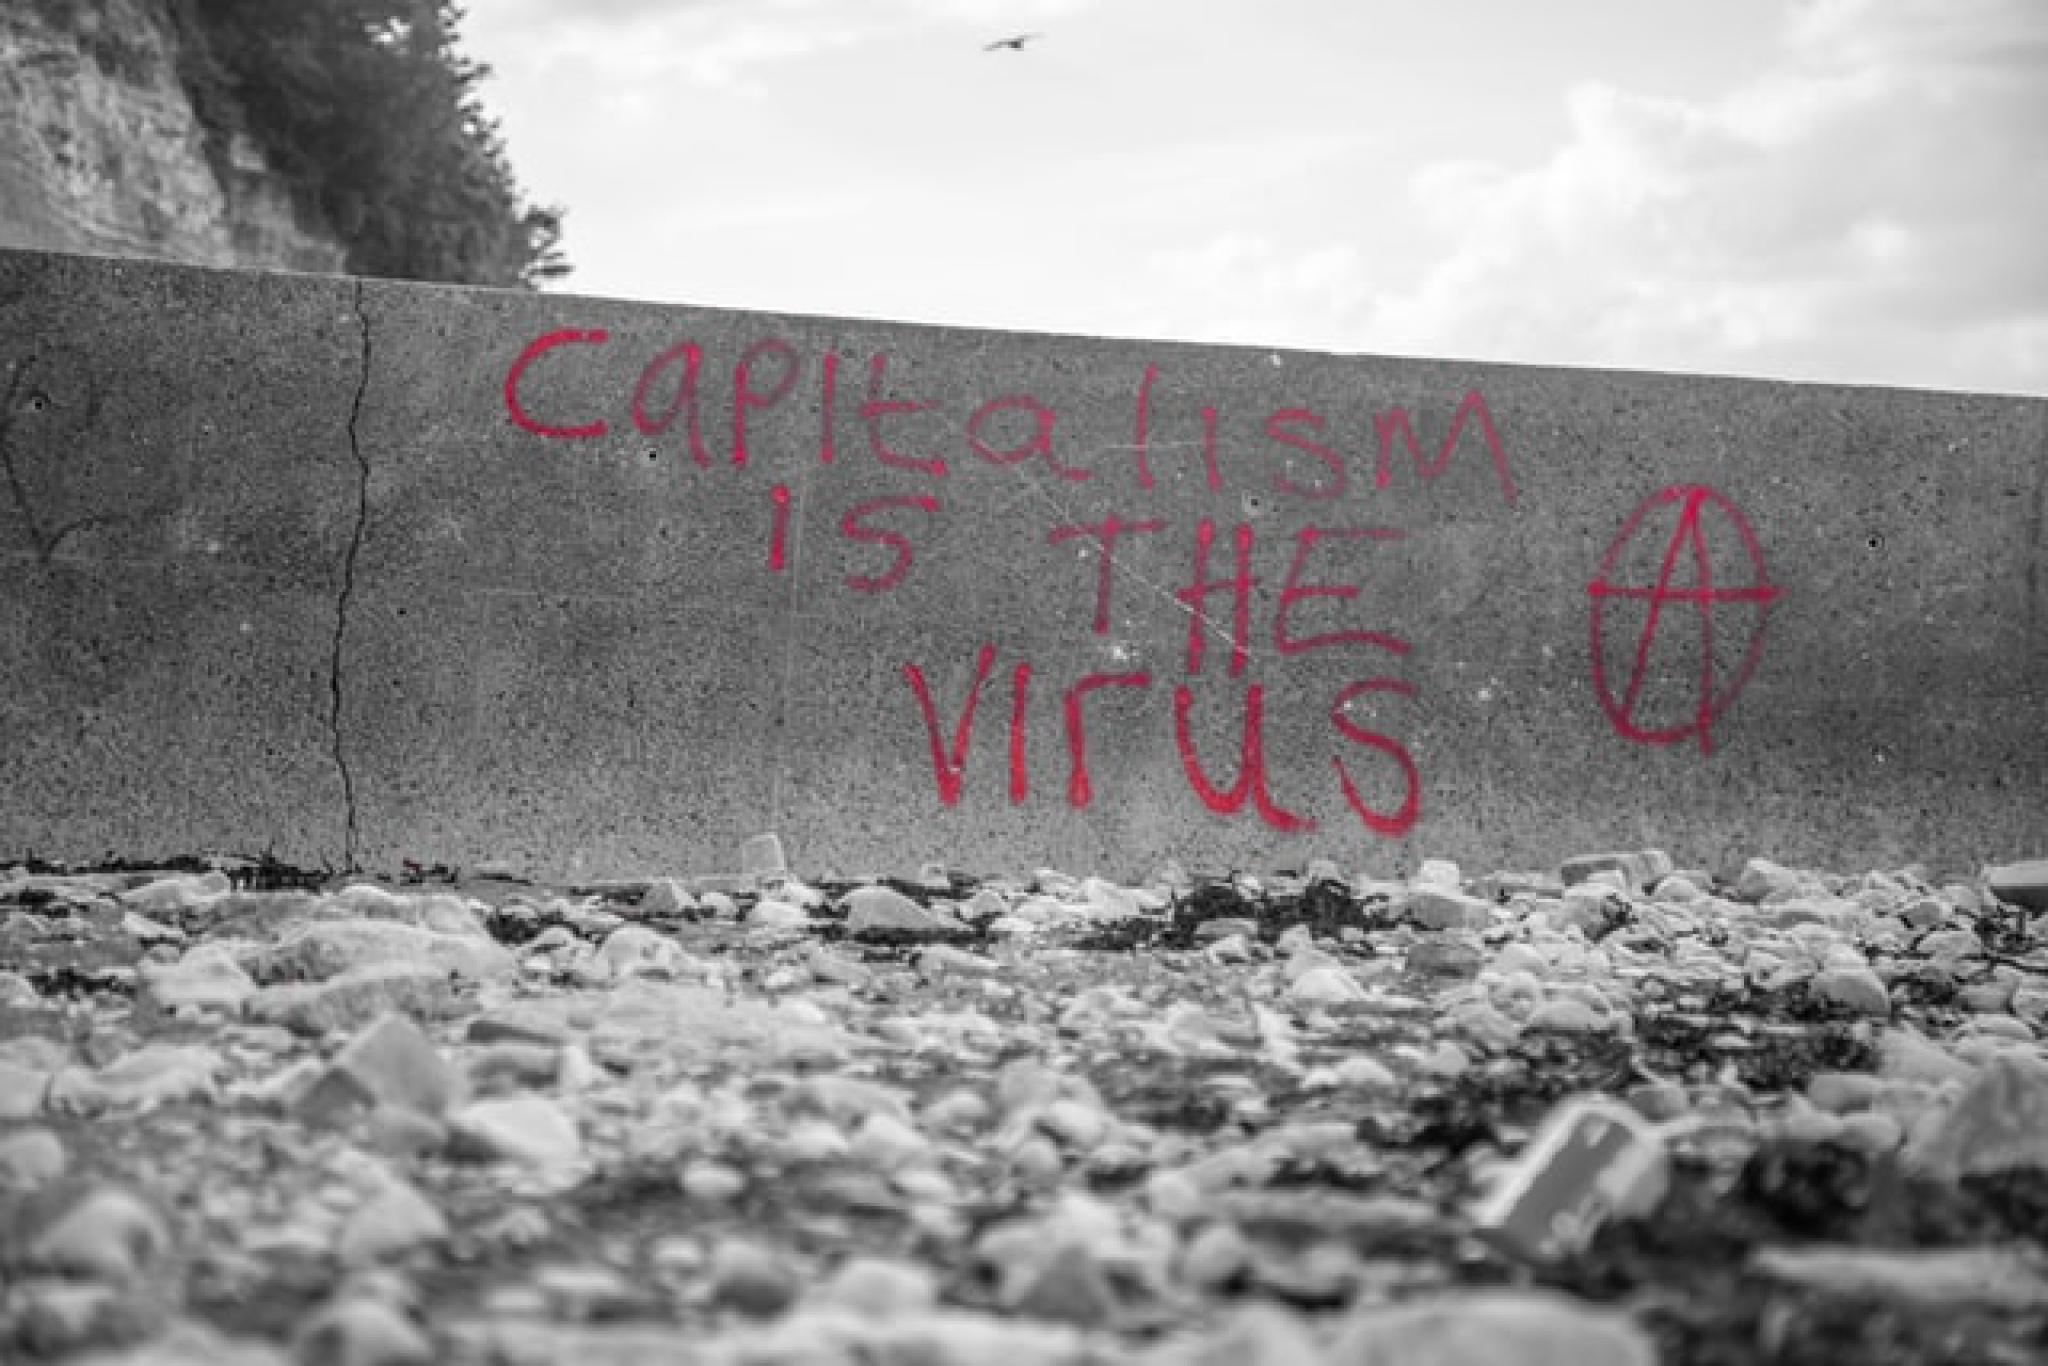 Photo of graffiti “Capitalism is the virus” by Mike Erskine on https://unsplash.com/photos/rrq7MuCoeX4